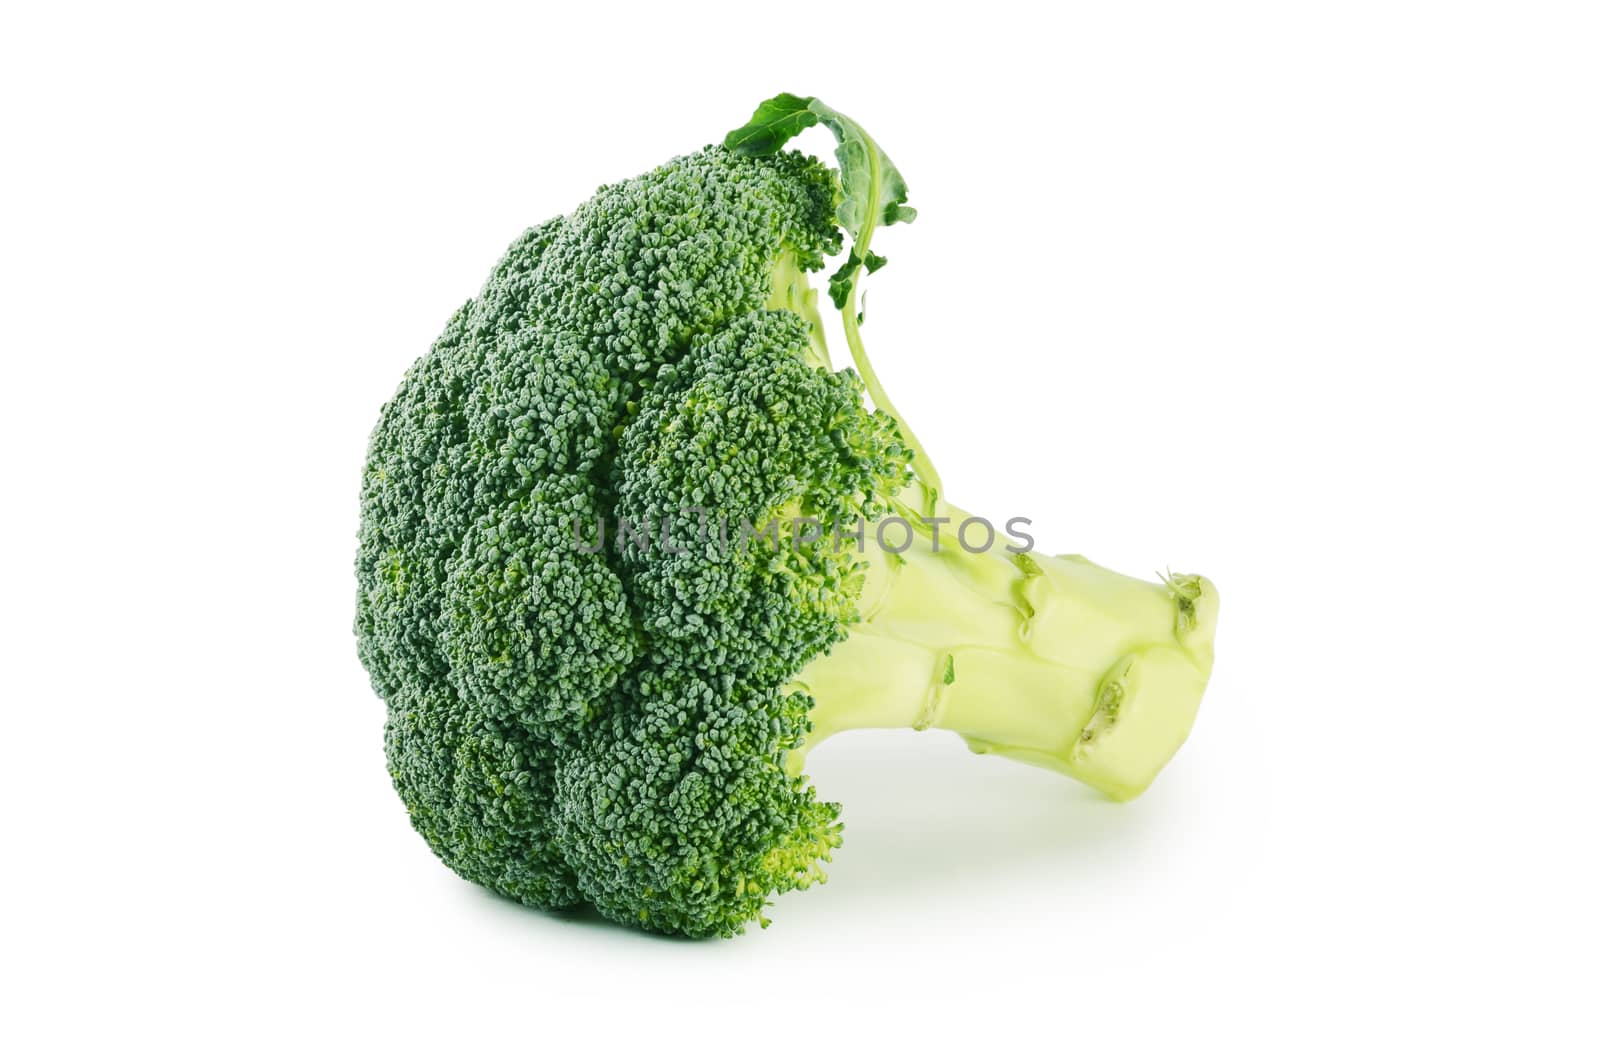 Fresh broccoli isolated on white background by SvetaVo